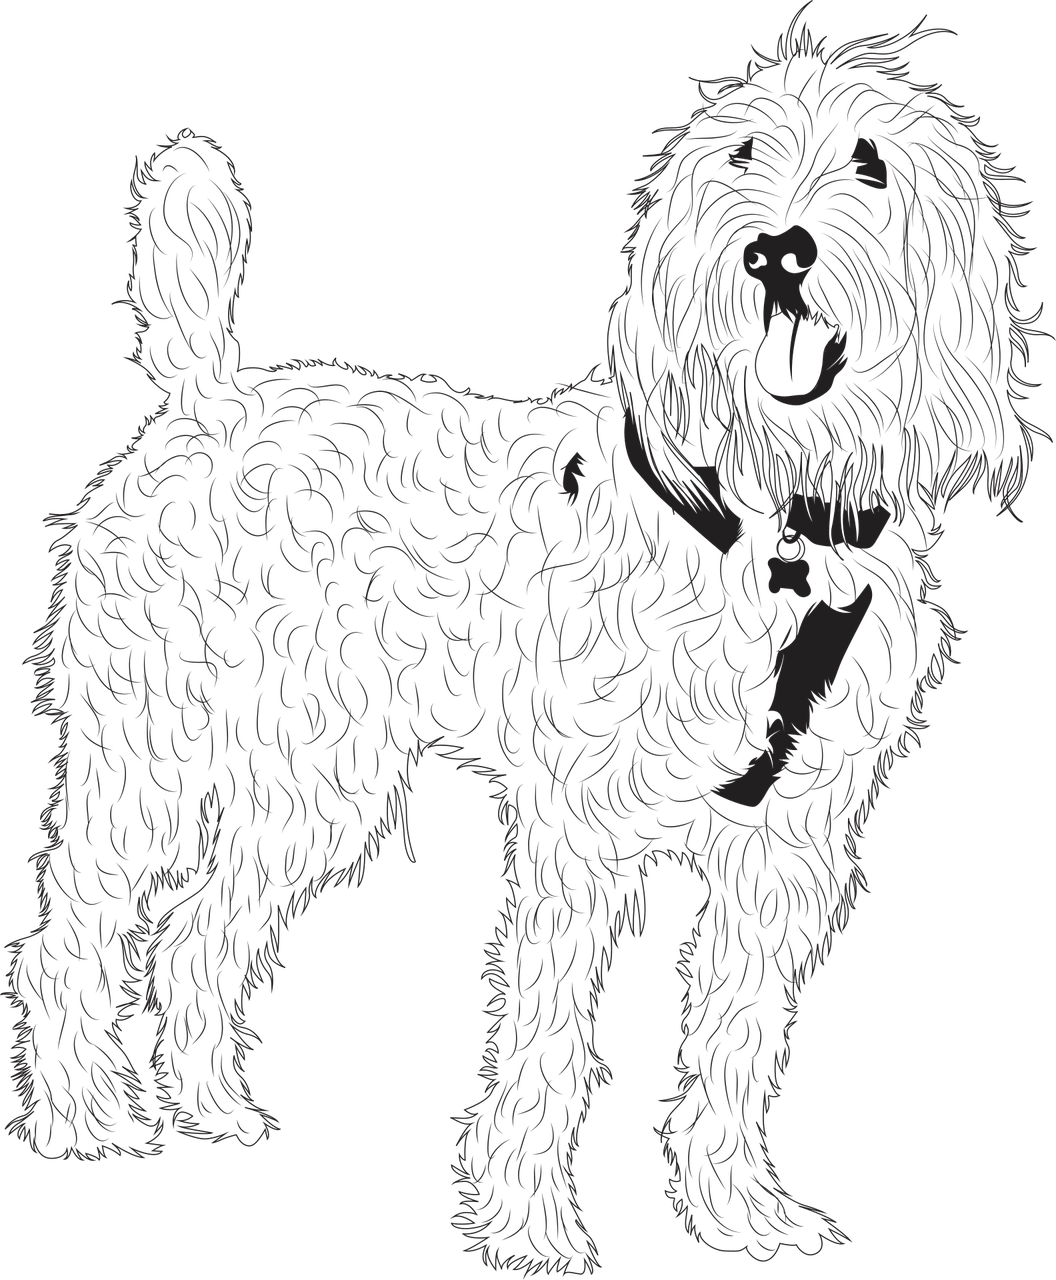 Doodle Golden Dog - Free vector graphic on Pixabay